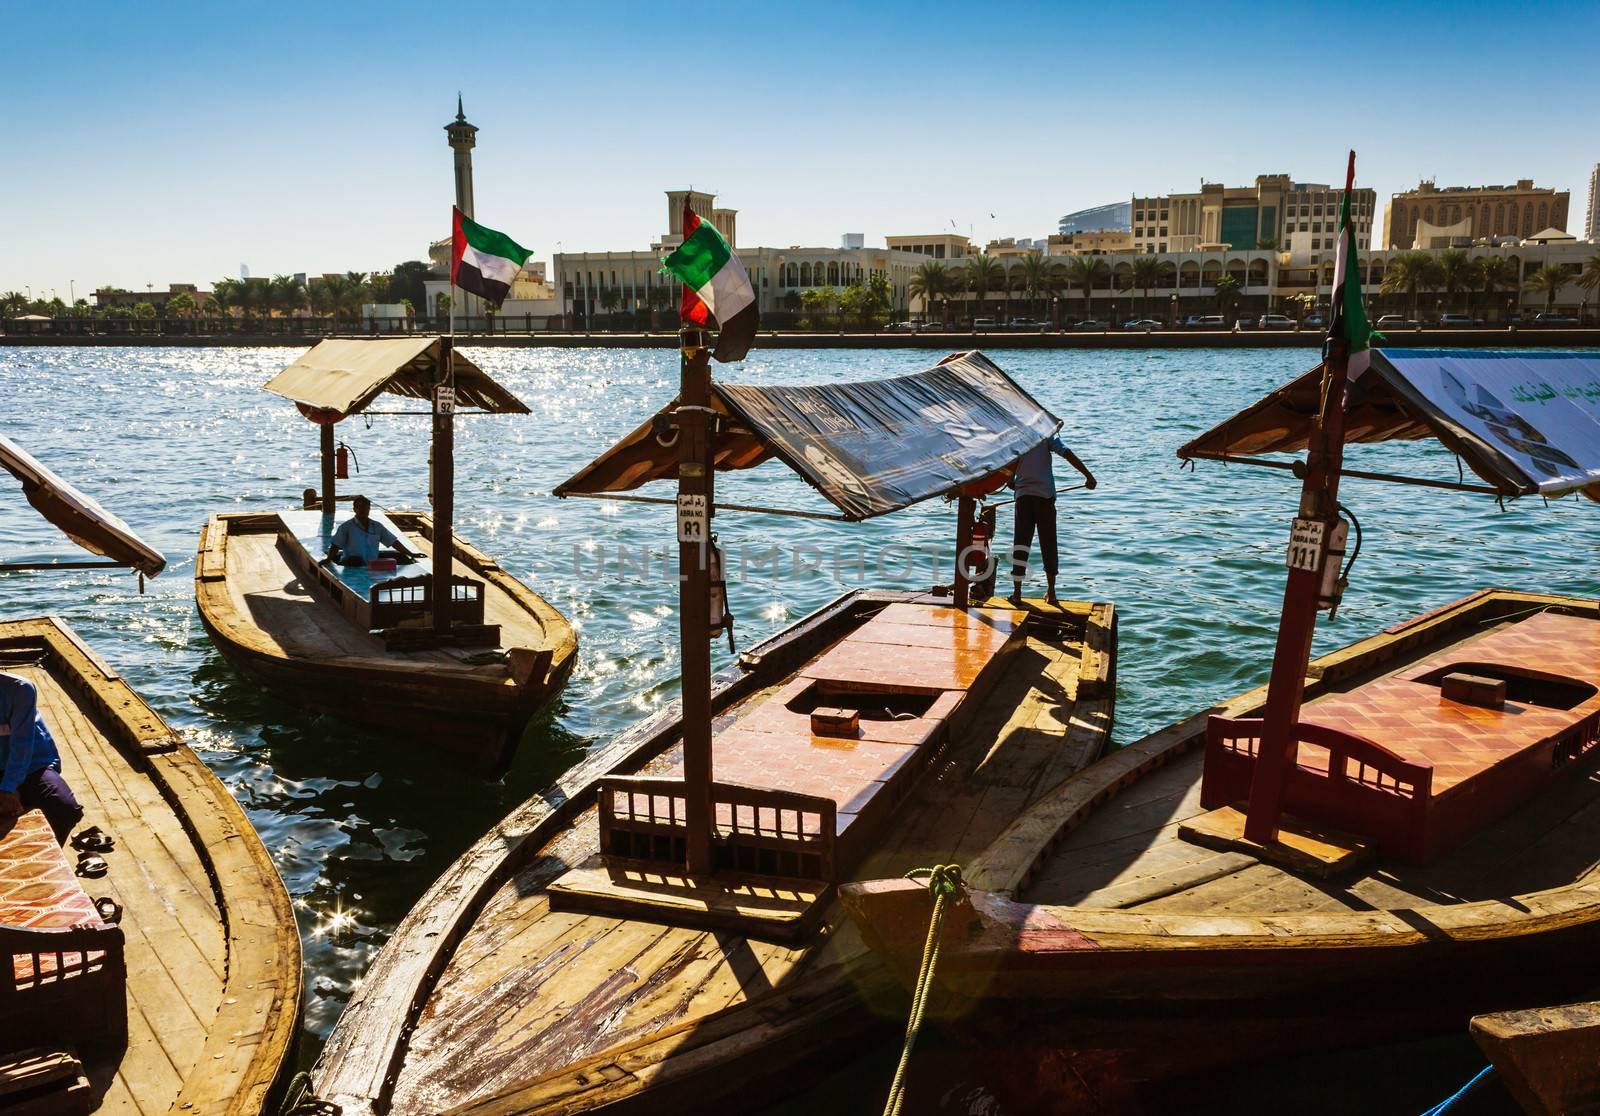 Boats on the Bay Creek in Dubai, UAE by oleg_zhukov